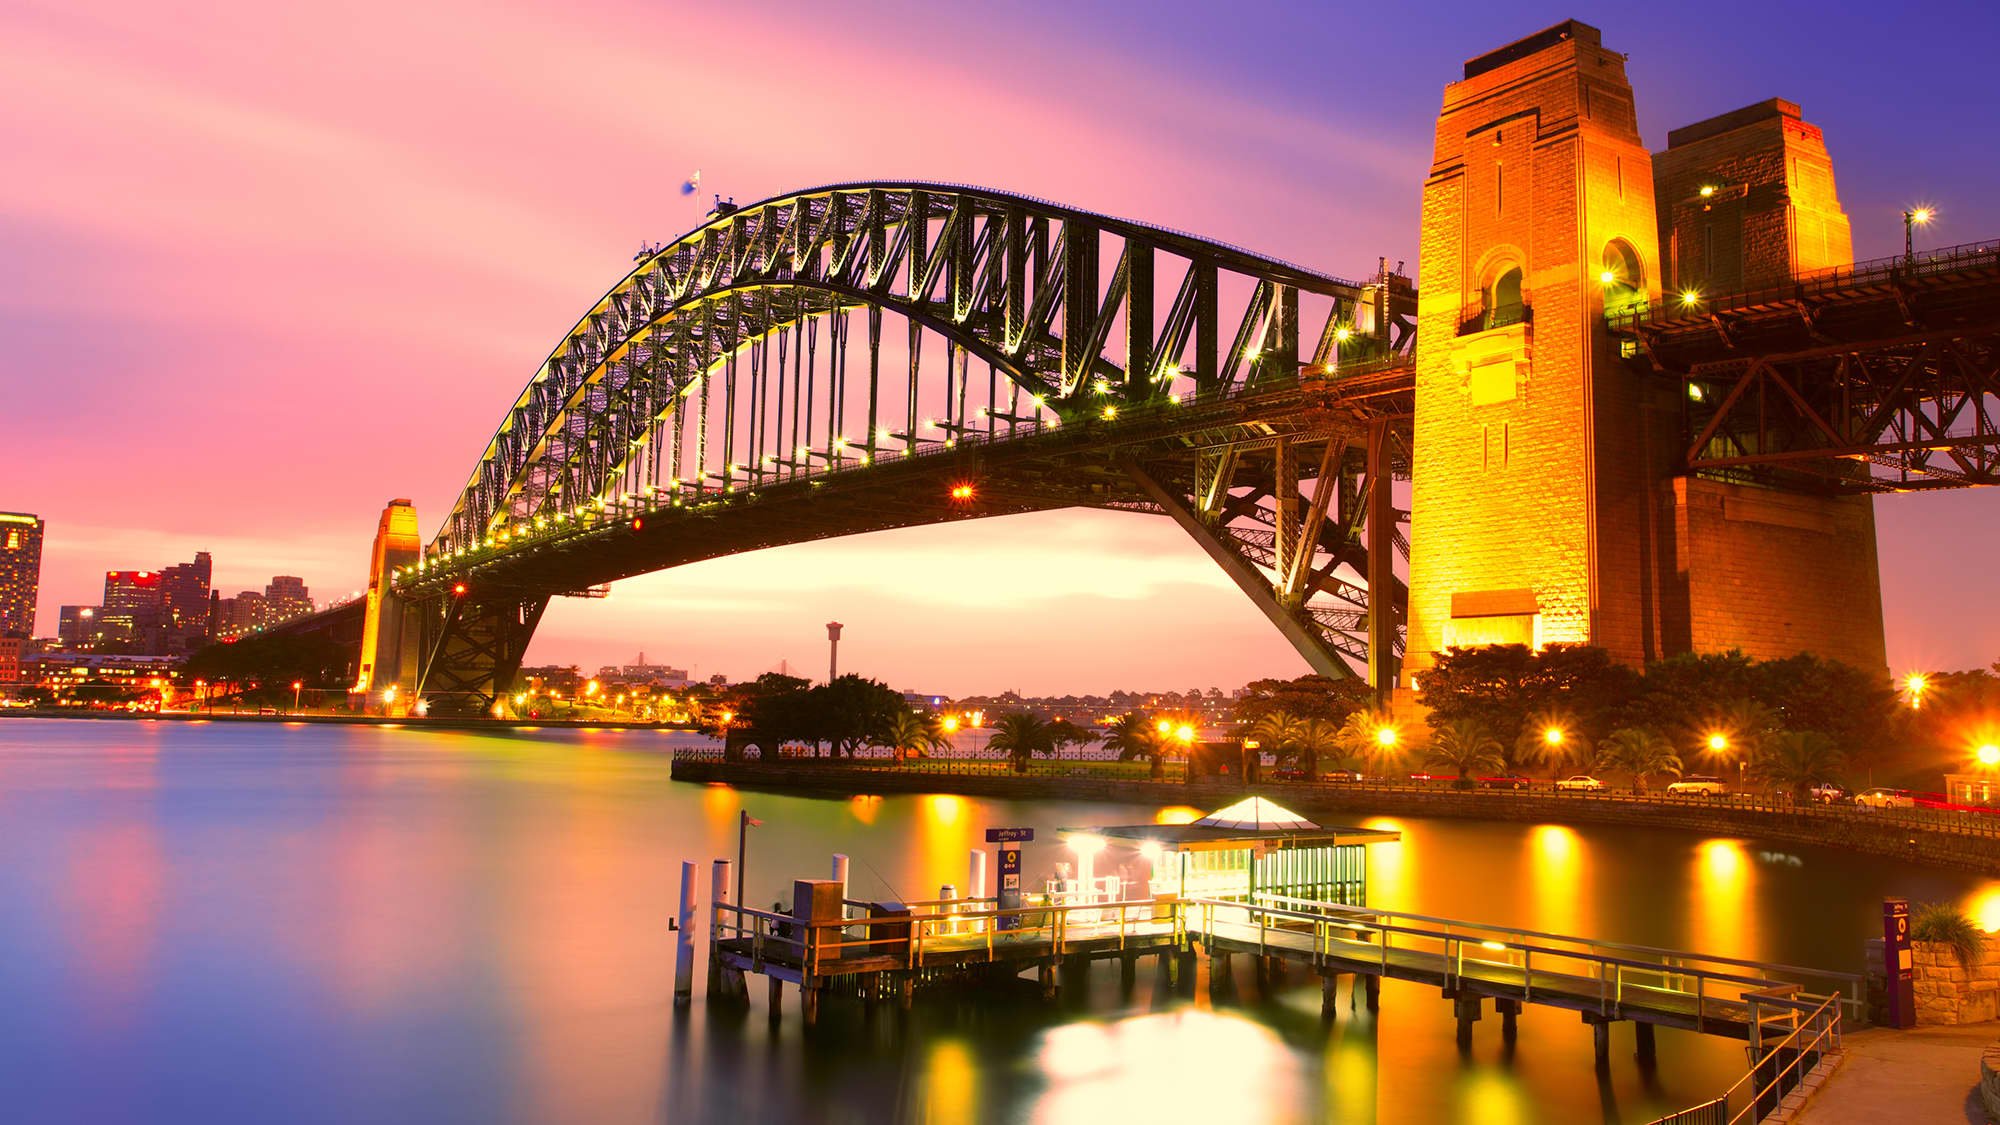 Harbour bridge. Харбор-бридж Сидней. Австралия.Сидней.мост Харбор-бридж. Сиднейский мост Харбор-бридж. Мост Харбор бридж в Австралии.